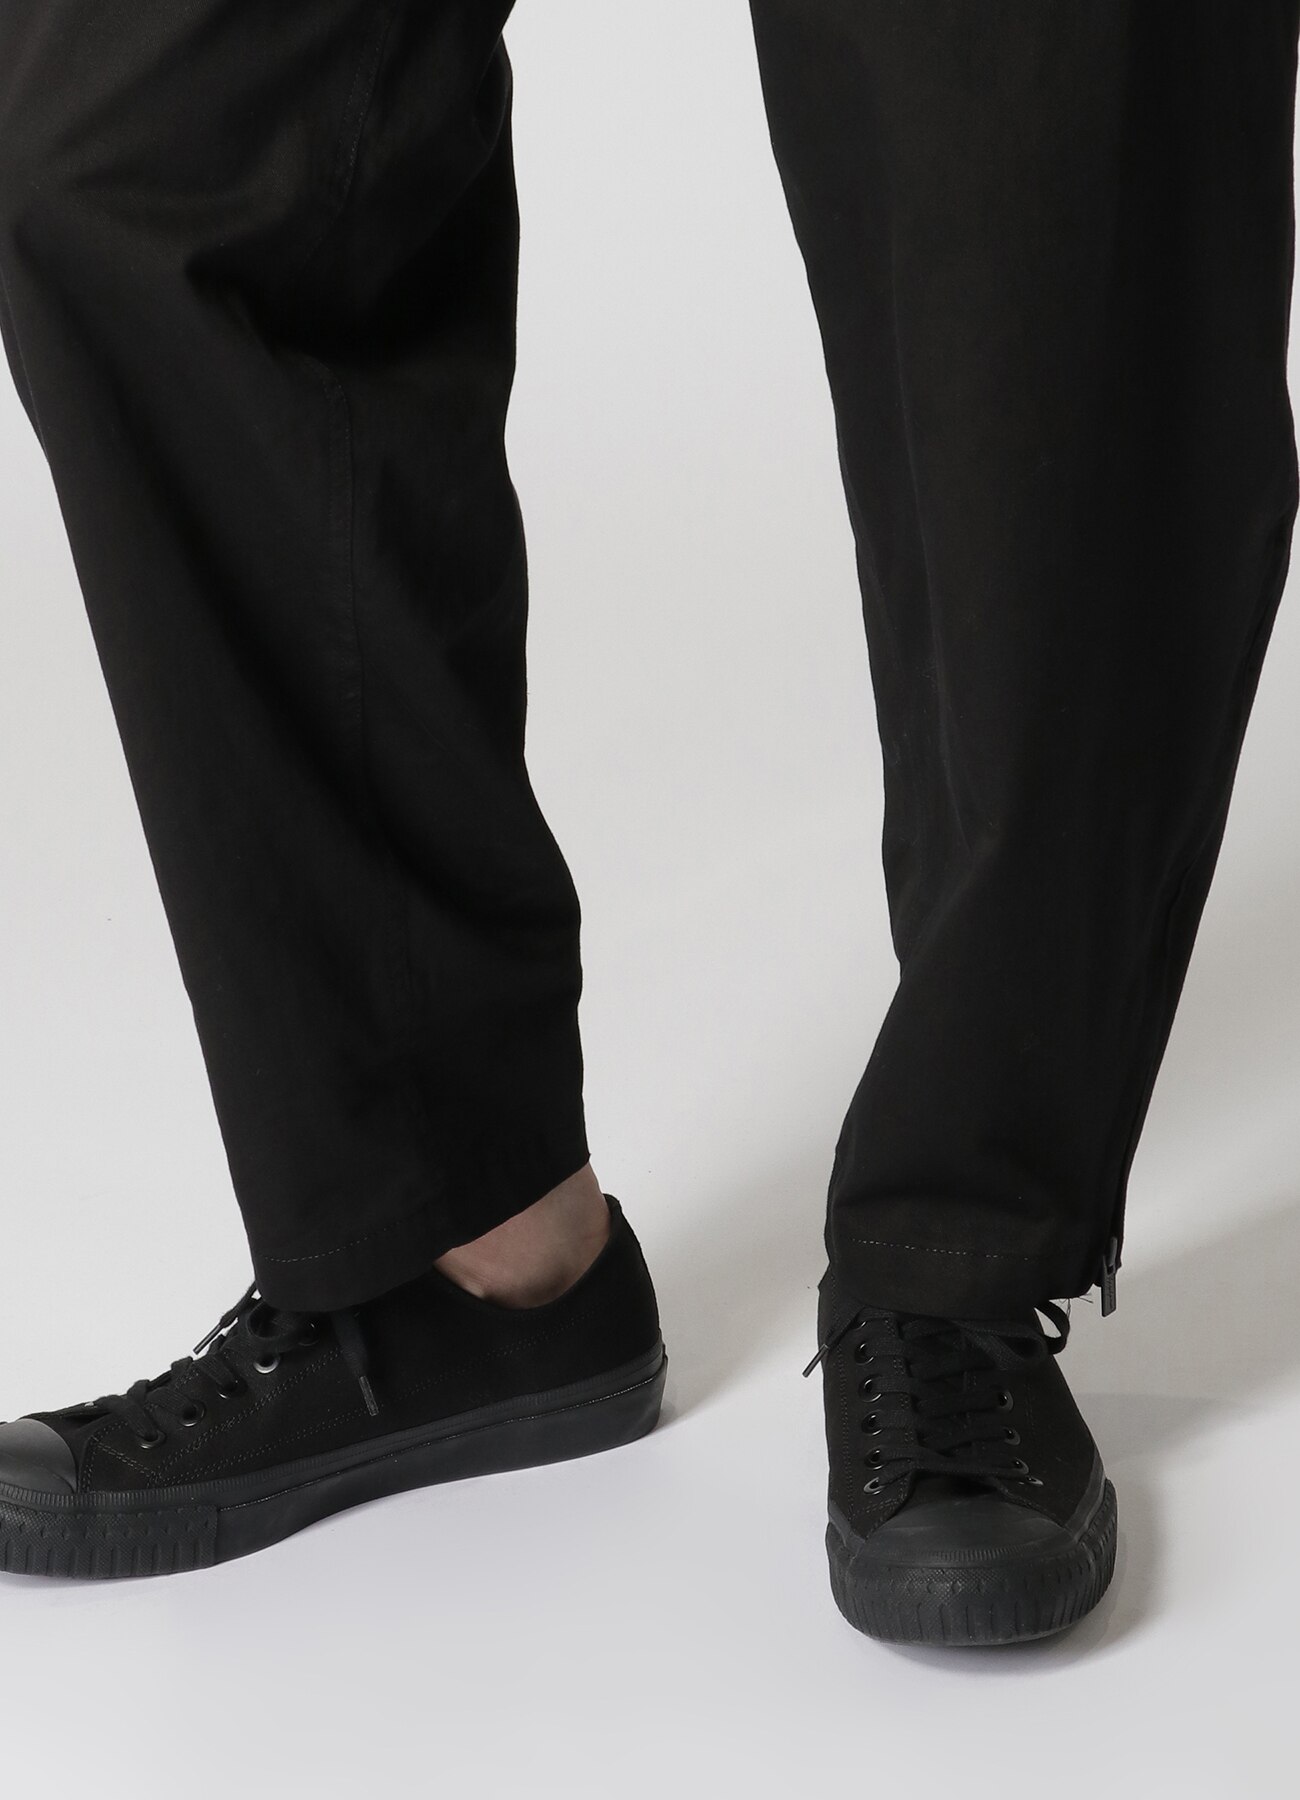 Fullcount Back Satin Utility Trousers (Olive) - Okayama Denim